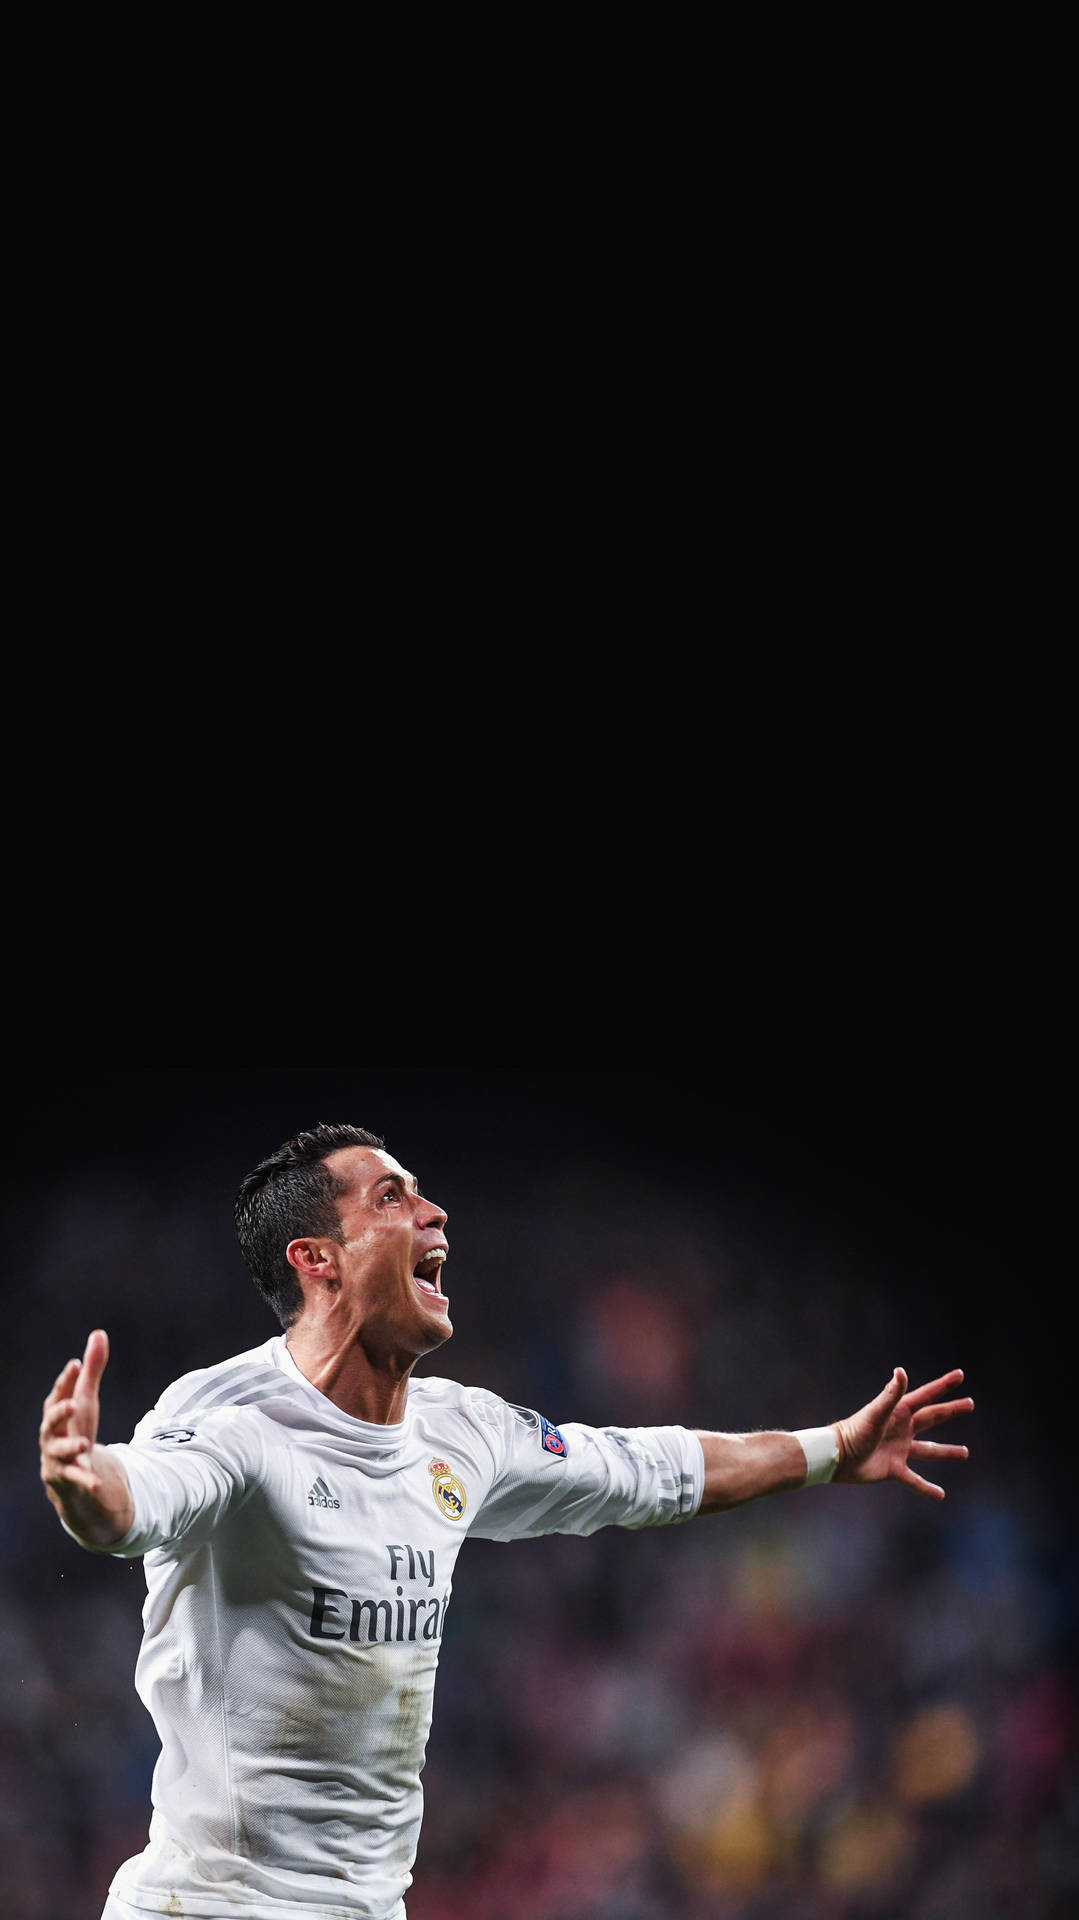 Real Madrid Cristiano Ronaldo Celebrating Wallpaper